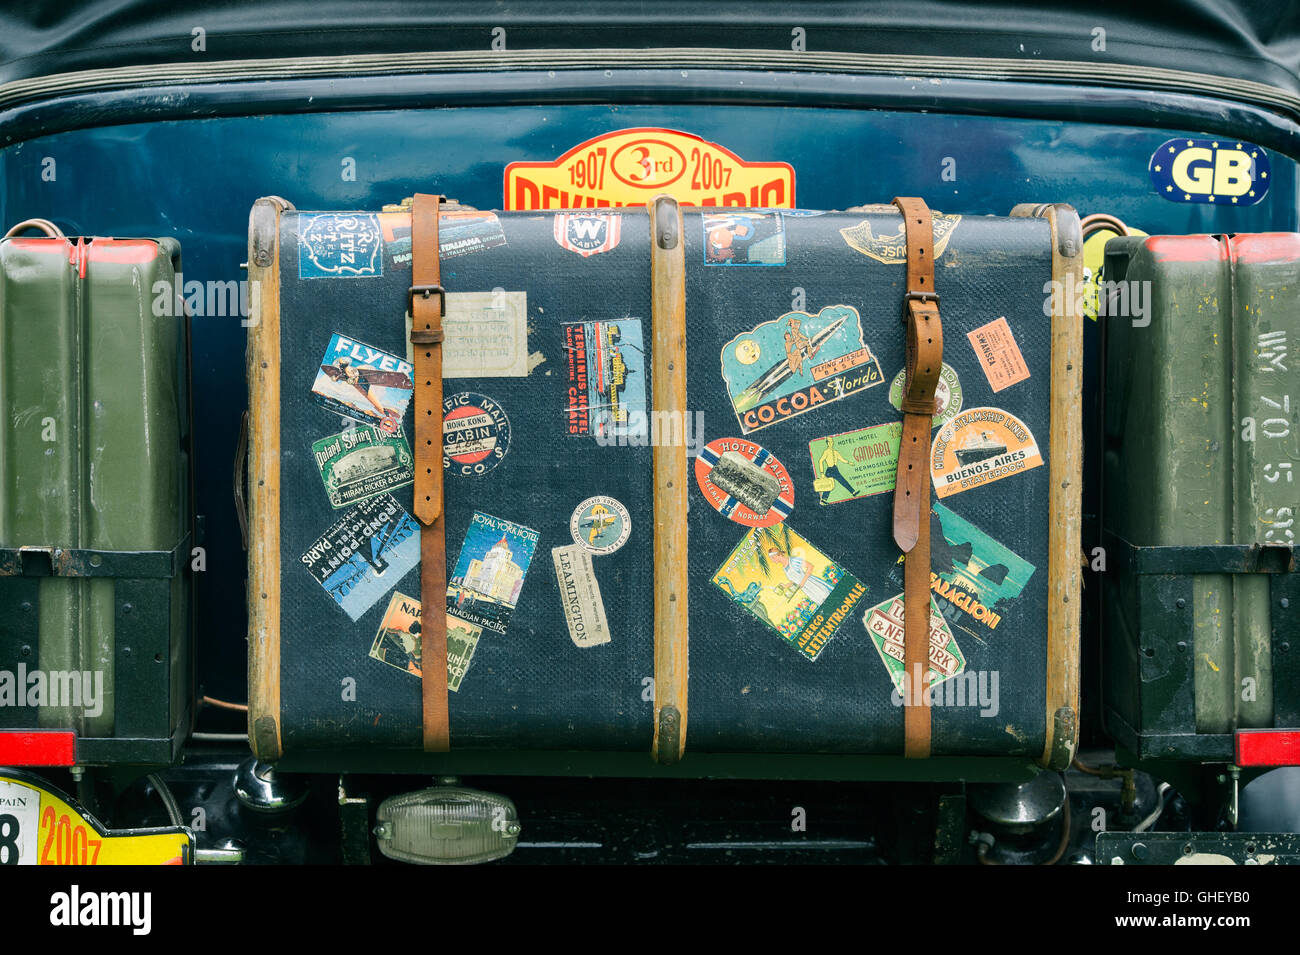 Old traveling trunk on a vintage car. UK. Vintage filter applied Stock Photo